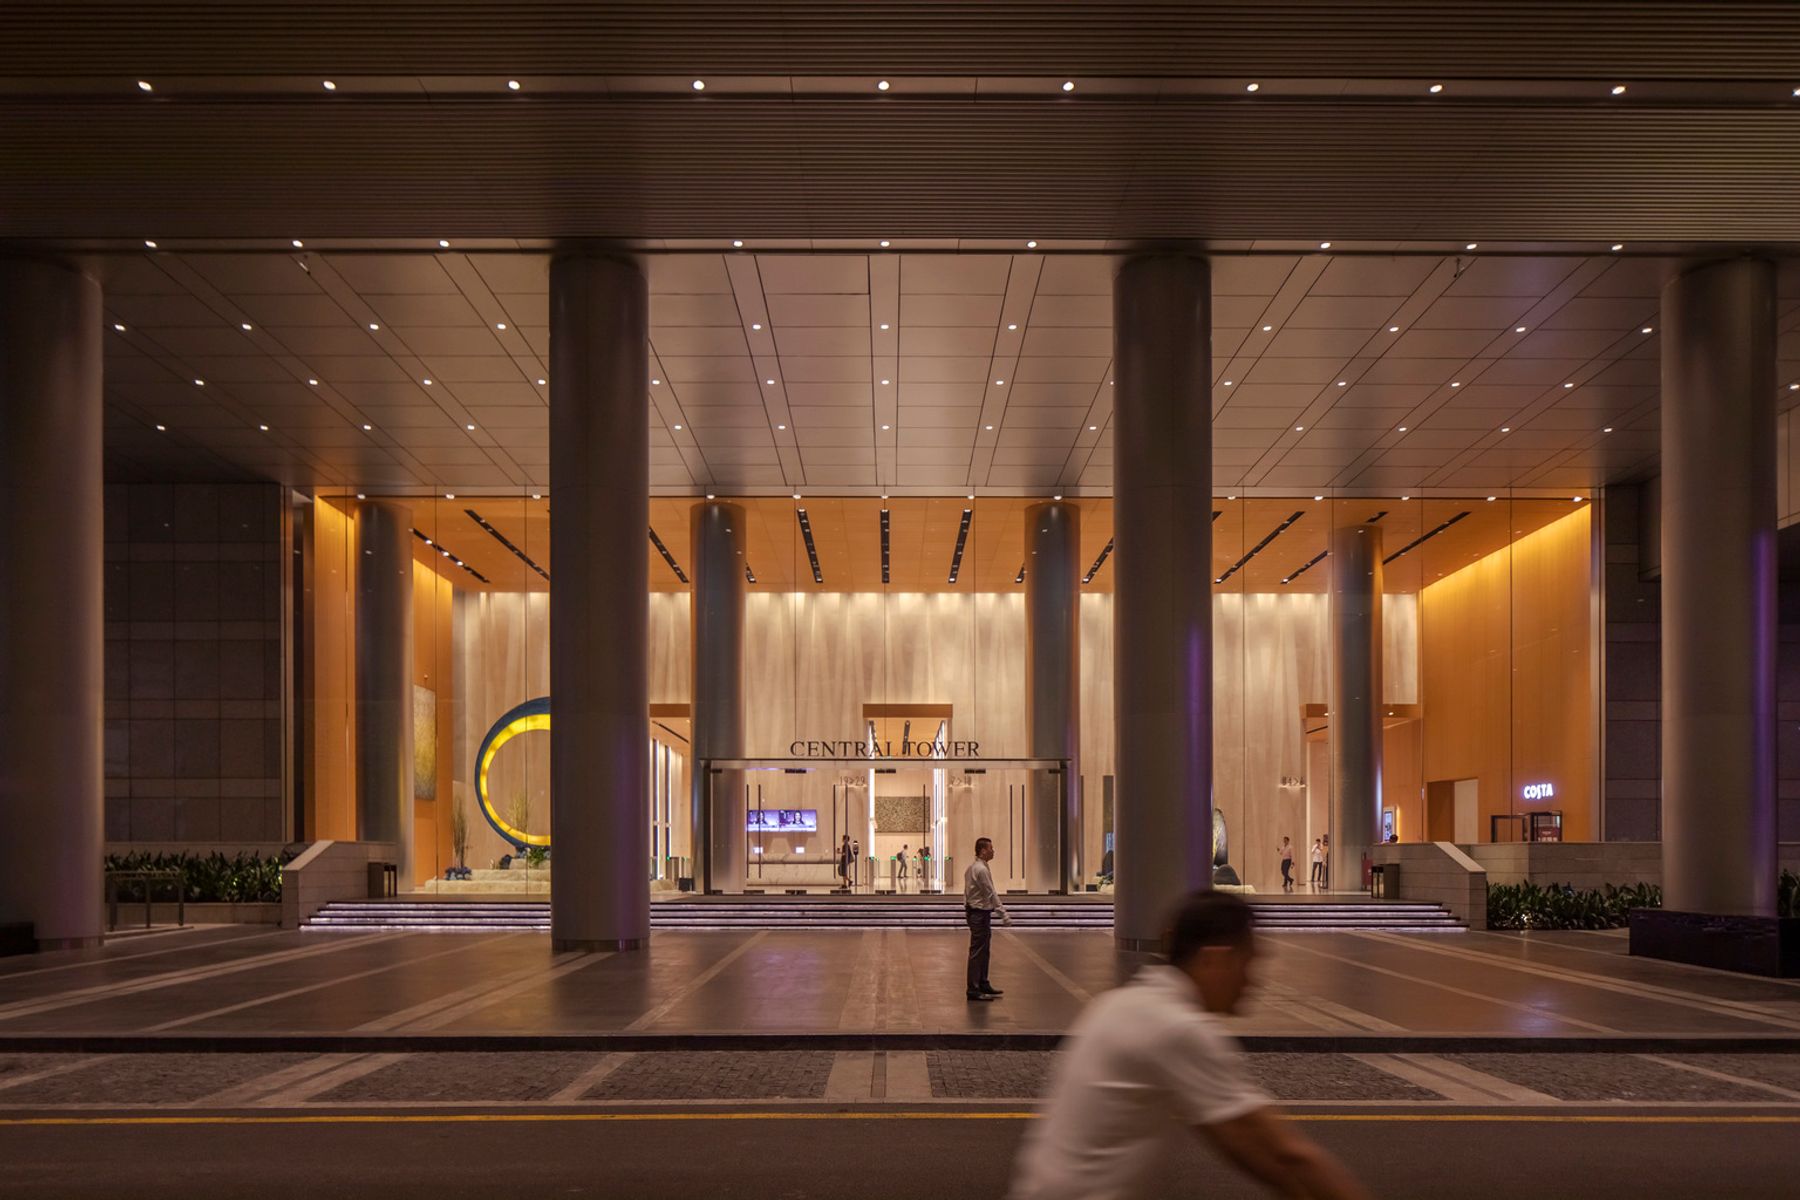 Central Tower Lobby, Guangzhou. Lighting design: Isometrix Lighting Design. Photography: Jackie Chan, Sydney.